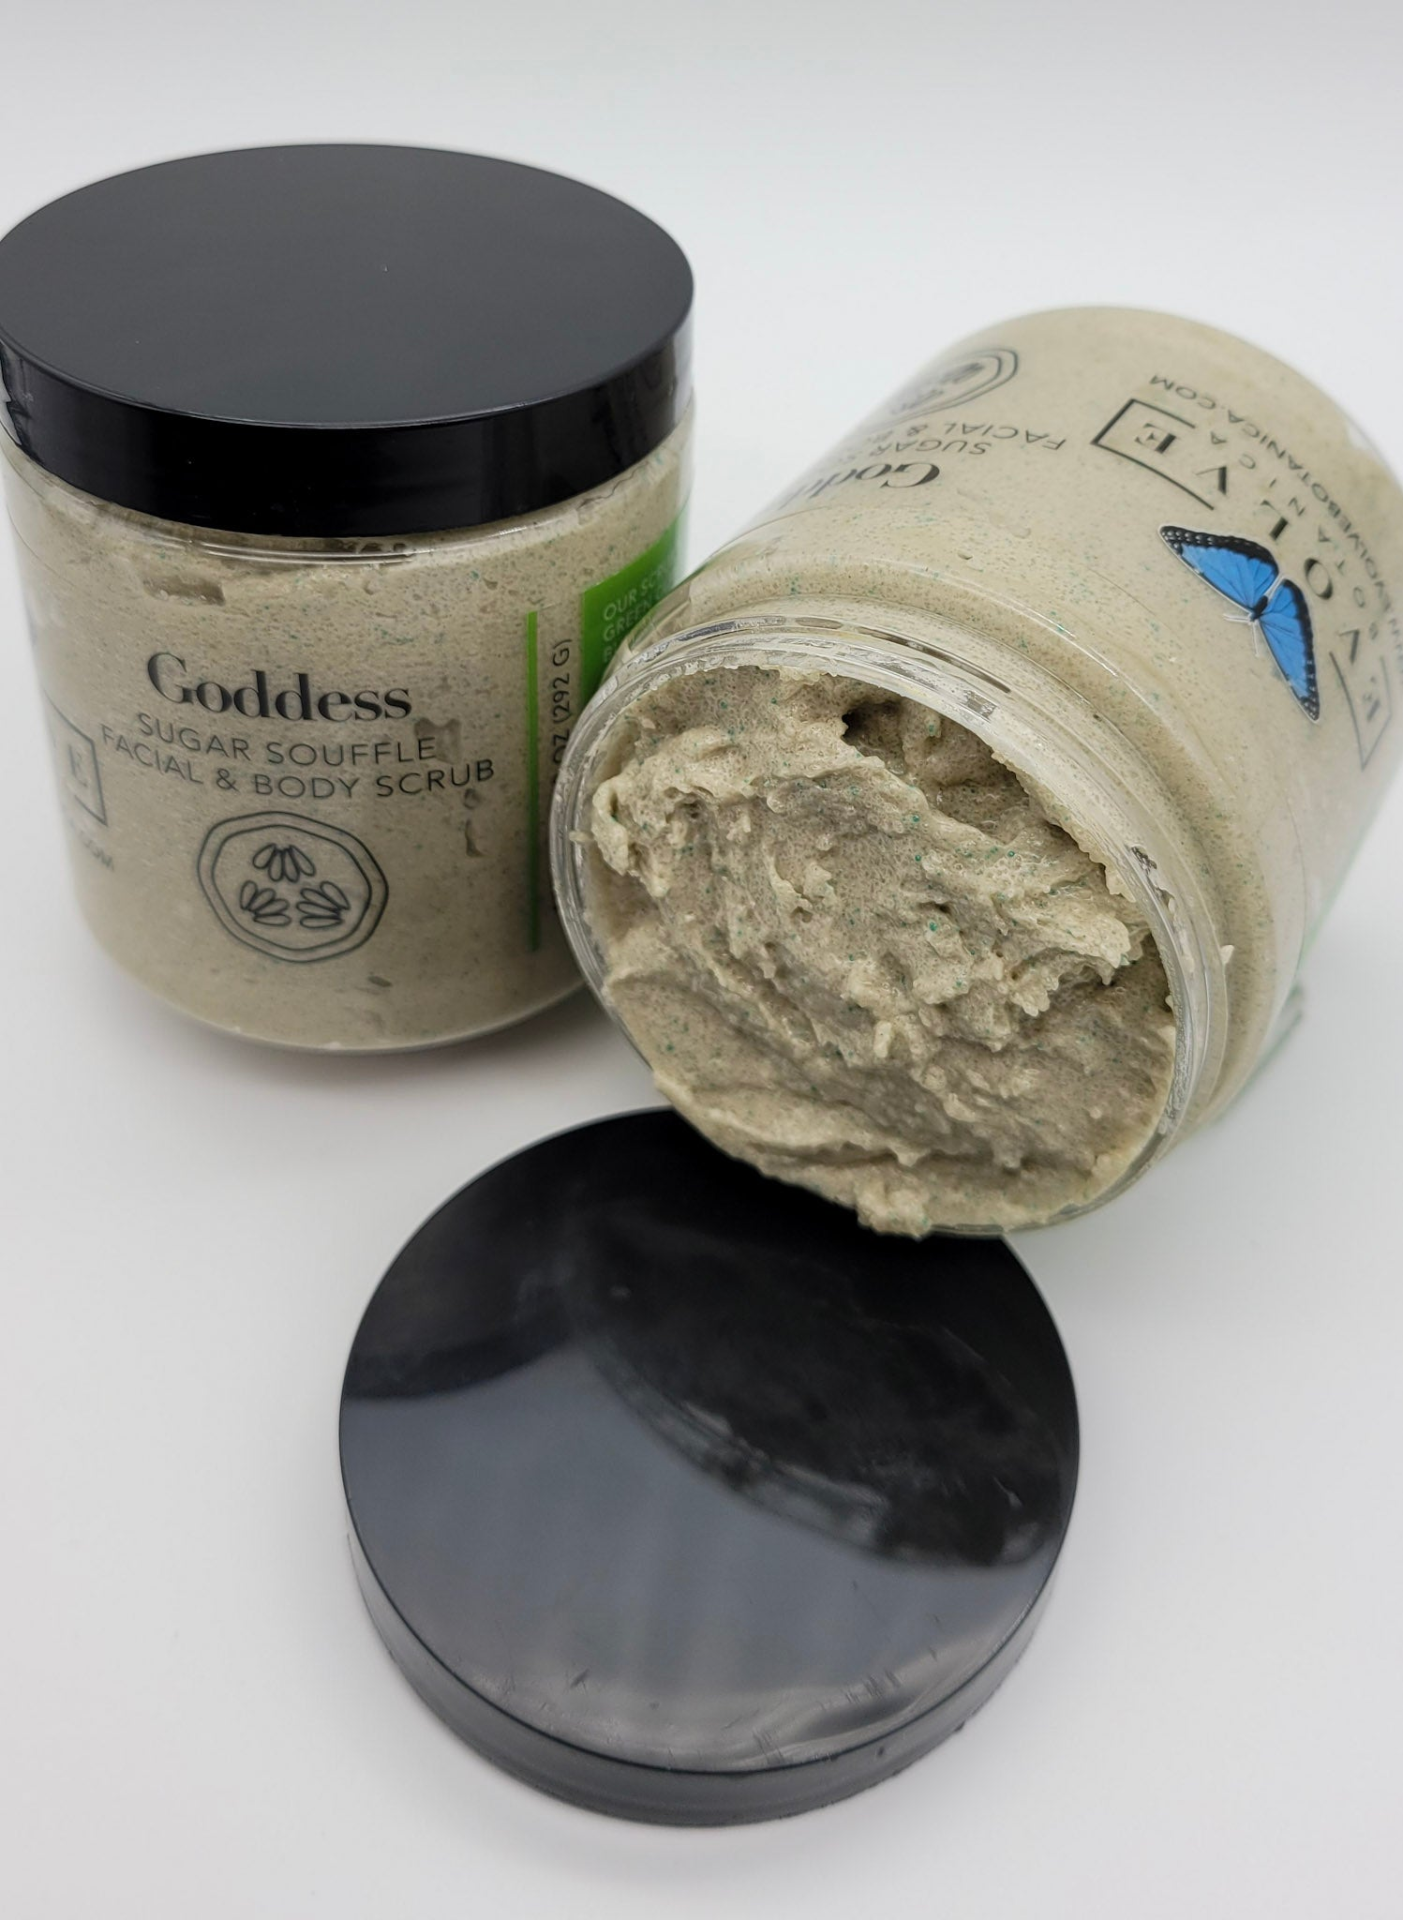 Goddess Facial and Body Scrub - Detoxifying Clay, Shea Butter, Cucumber Seed Oil